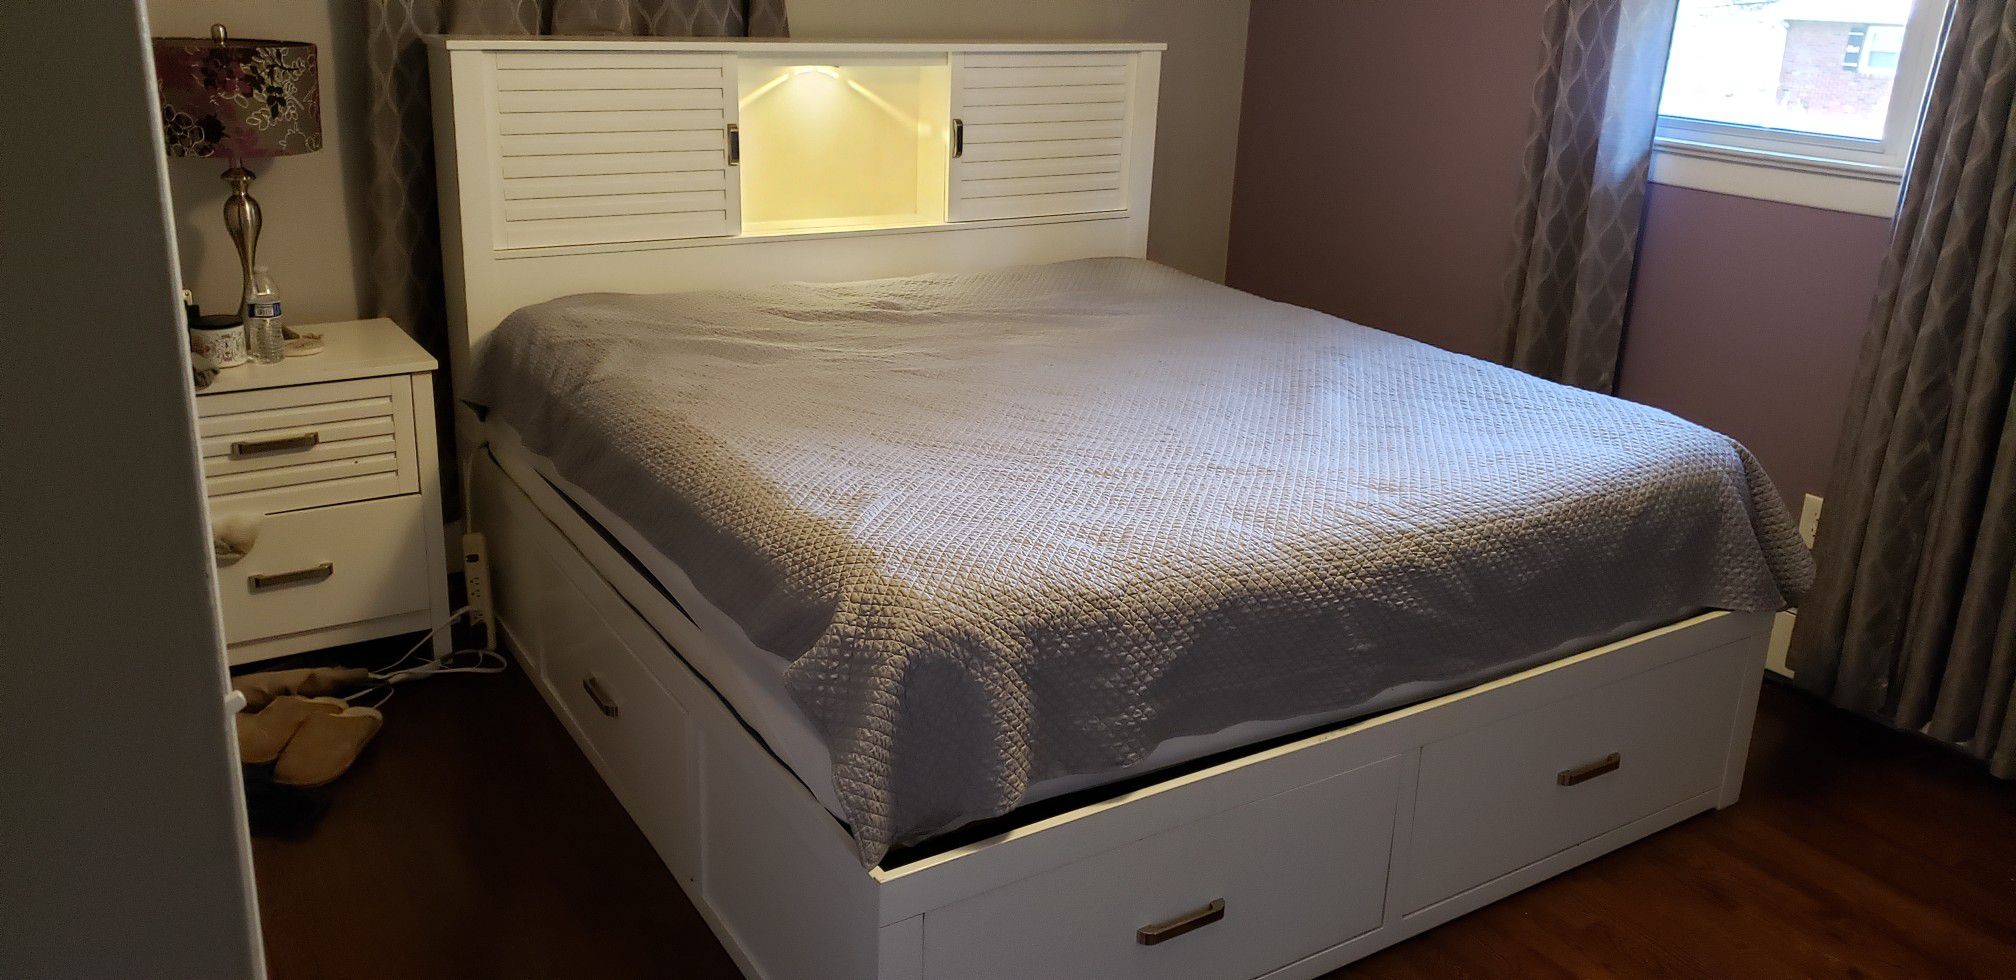 King size bed frame no mattress